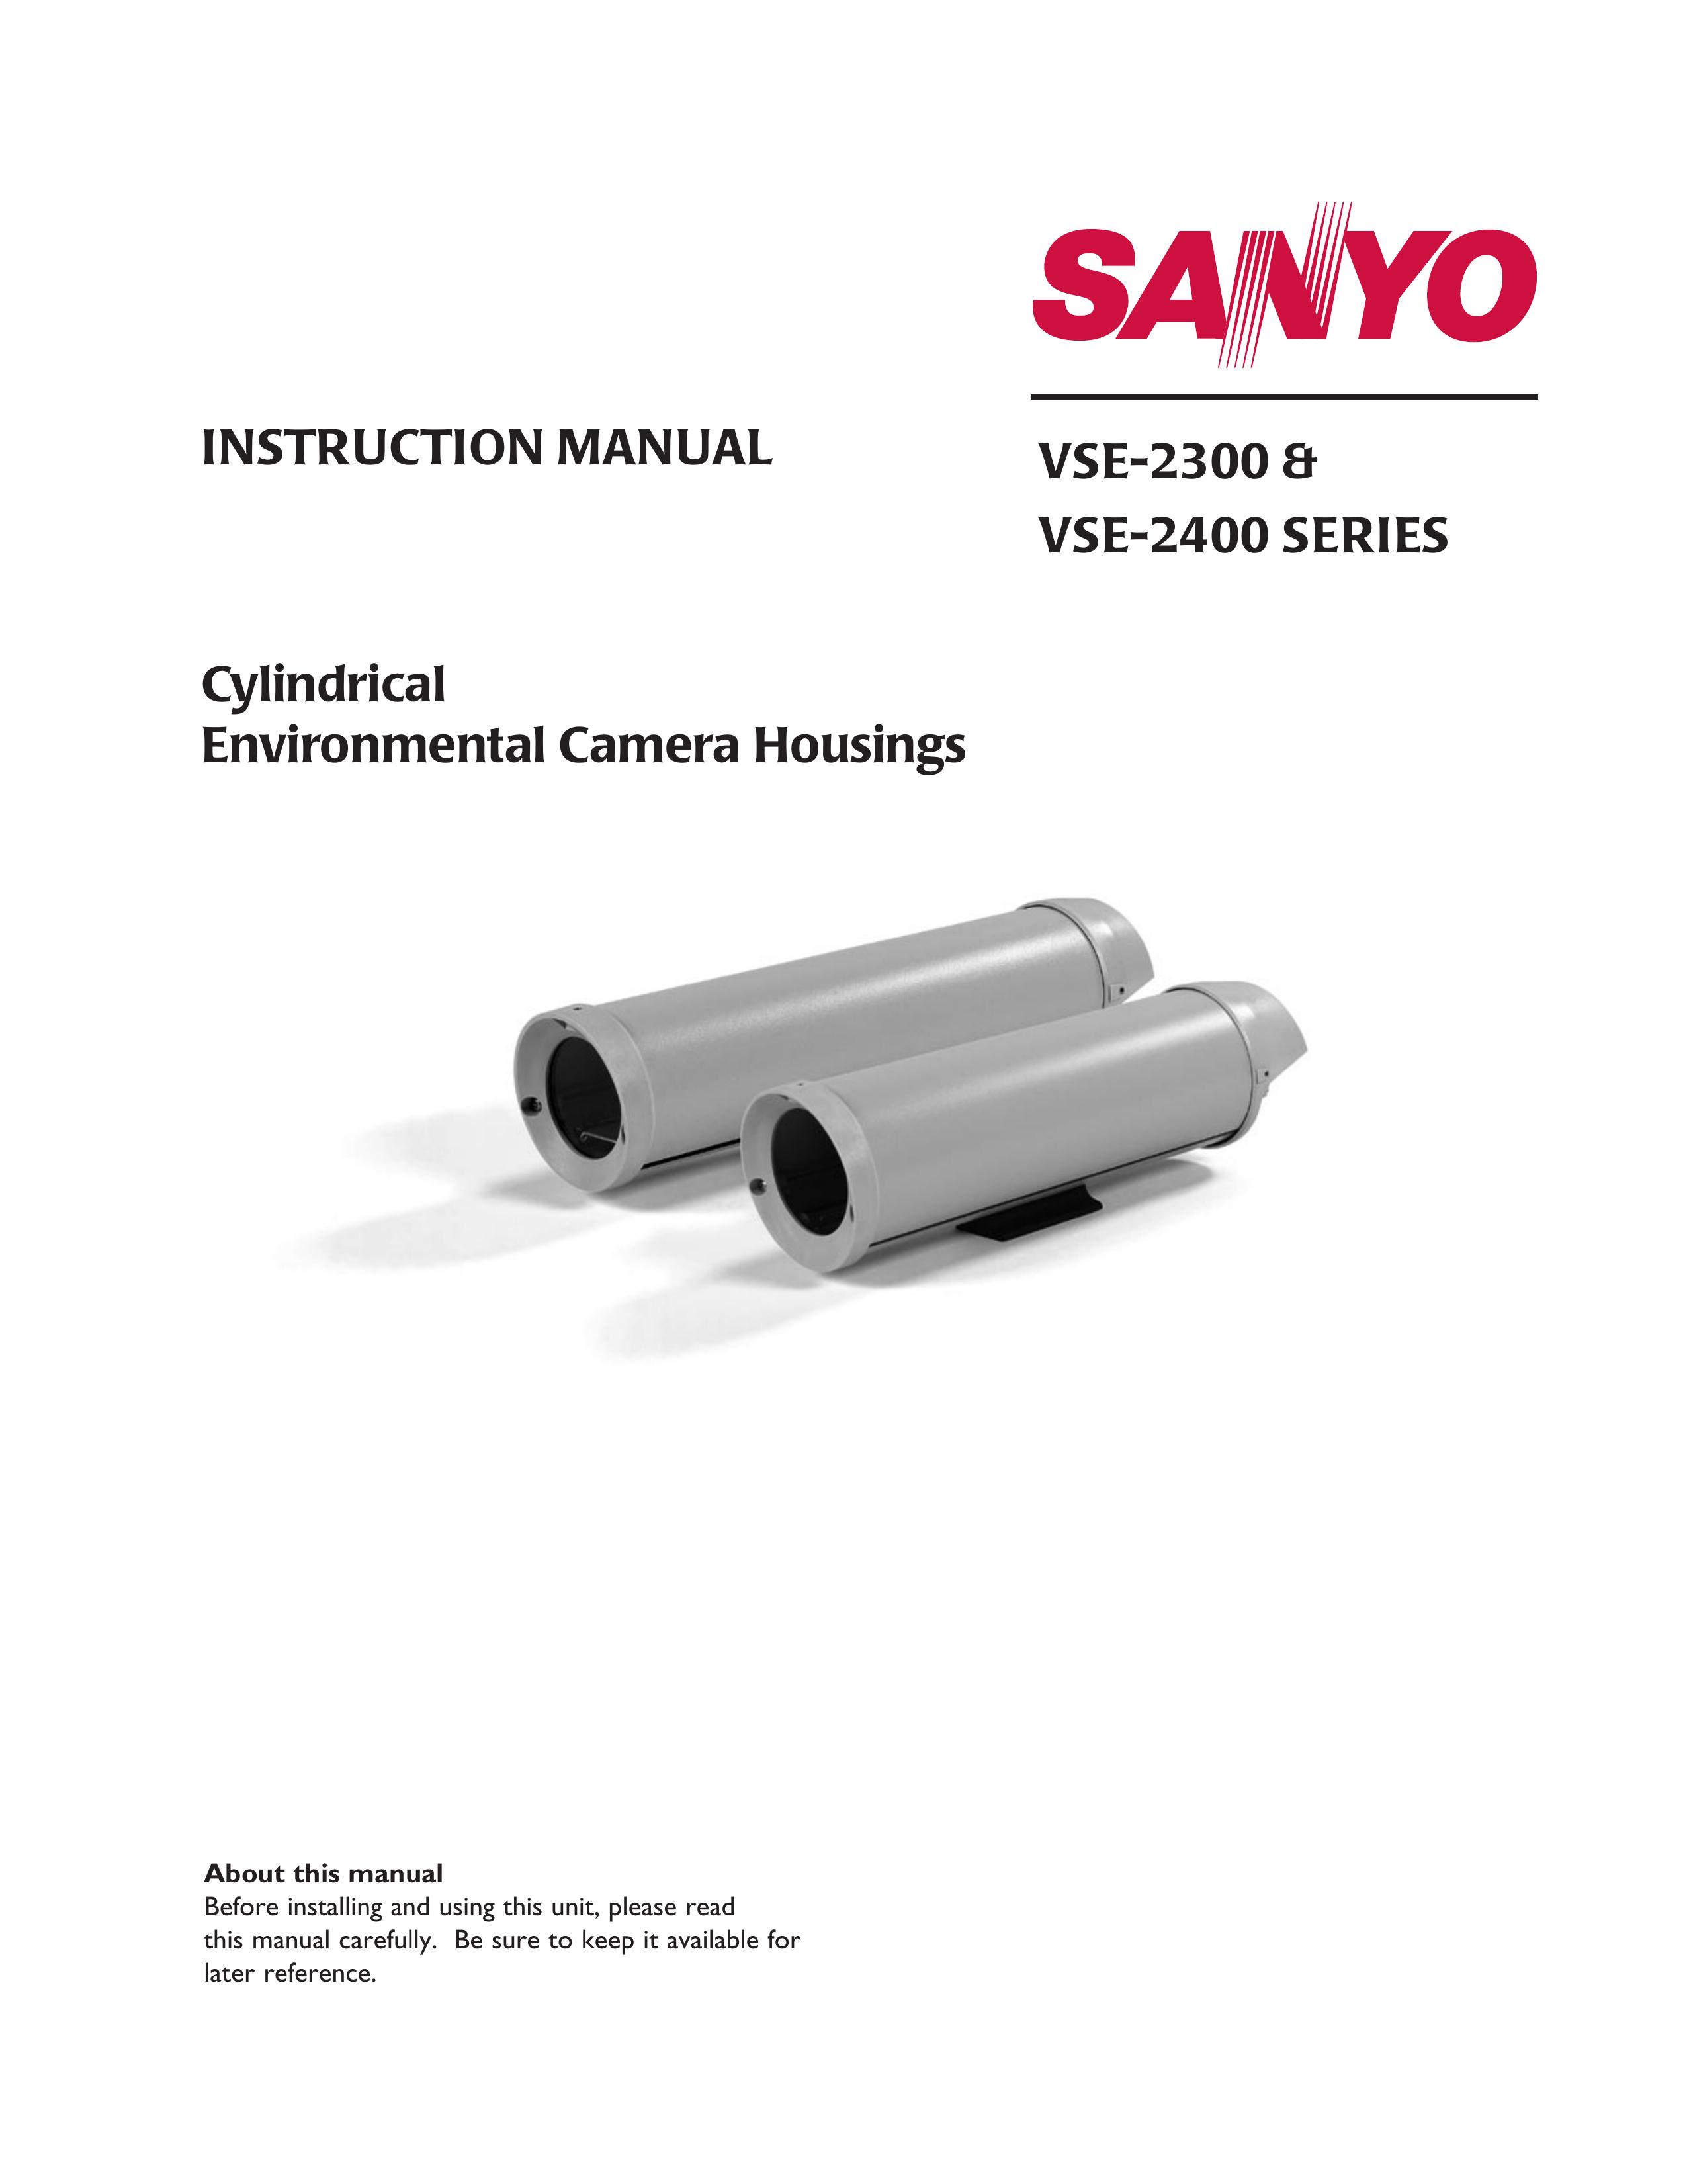 Sanyo VSE-2300 Camera Accessories User Manual